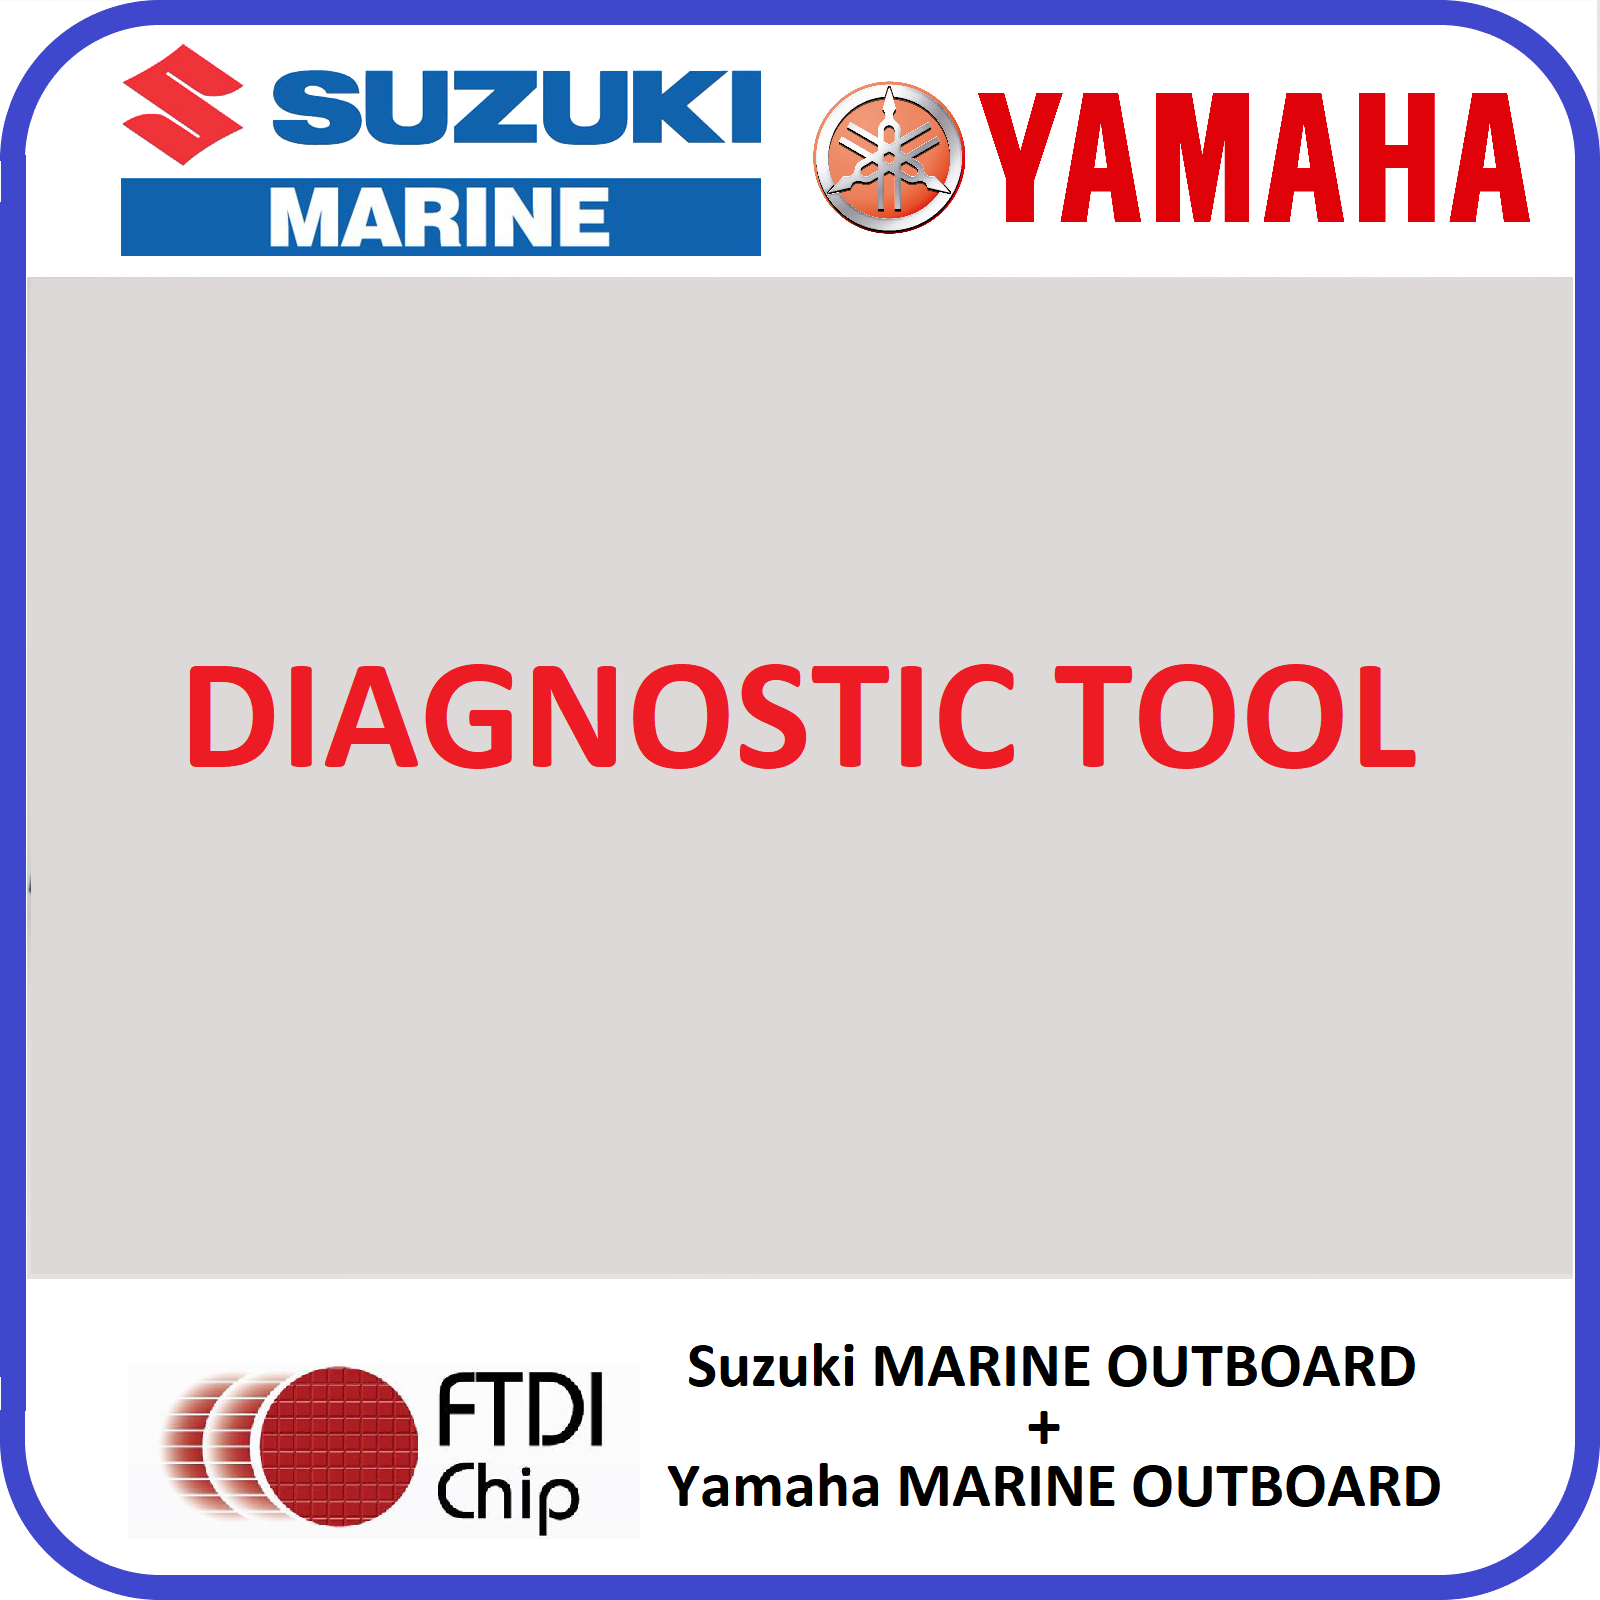 Diagnostic USB Cable kit for Suzuki SDS Yamaha Super intense SALE 1.33 O YDS Spasm price 8.60 +